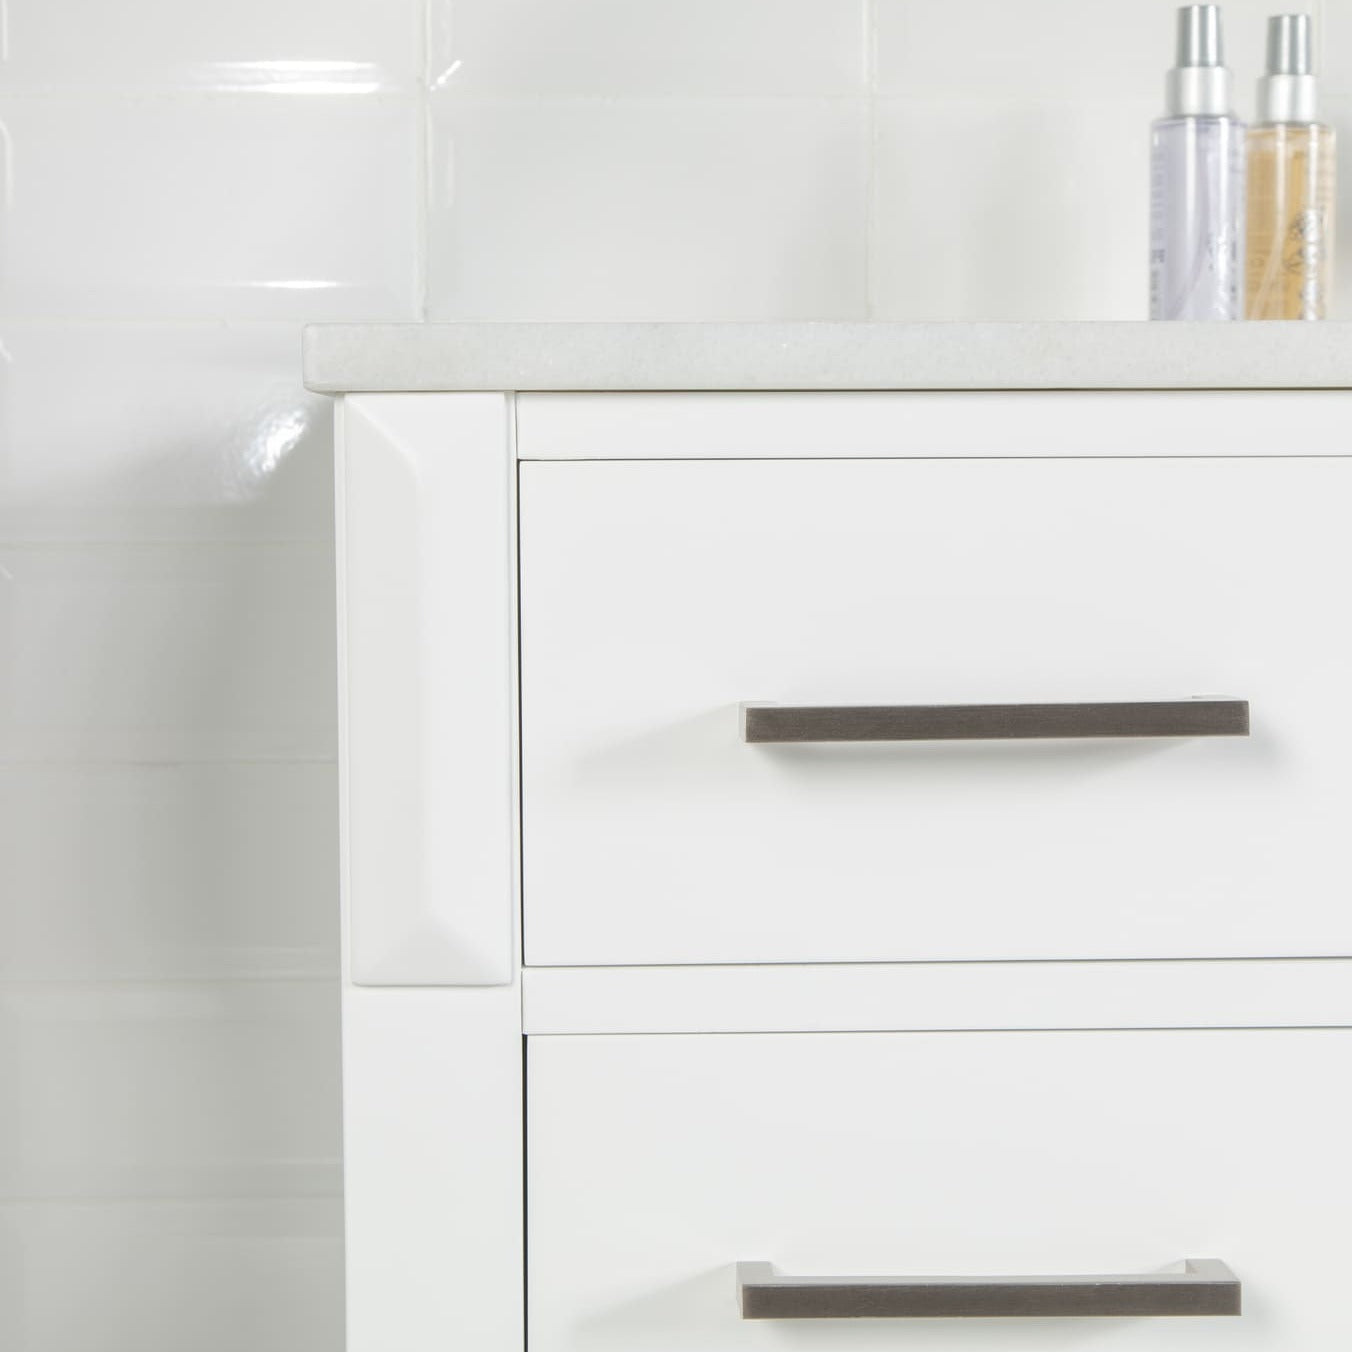 Fawna Bathroom Vanity Homelero 48"  #size_48"  #color_white  #hardware_brushed nickel